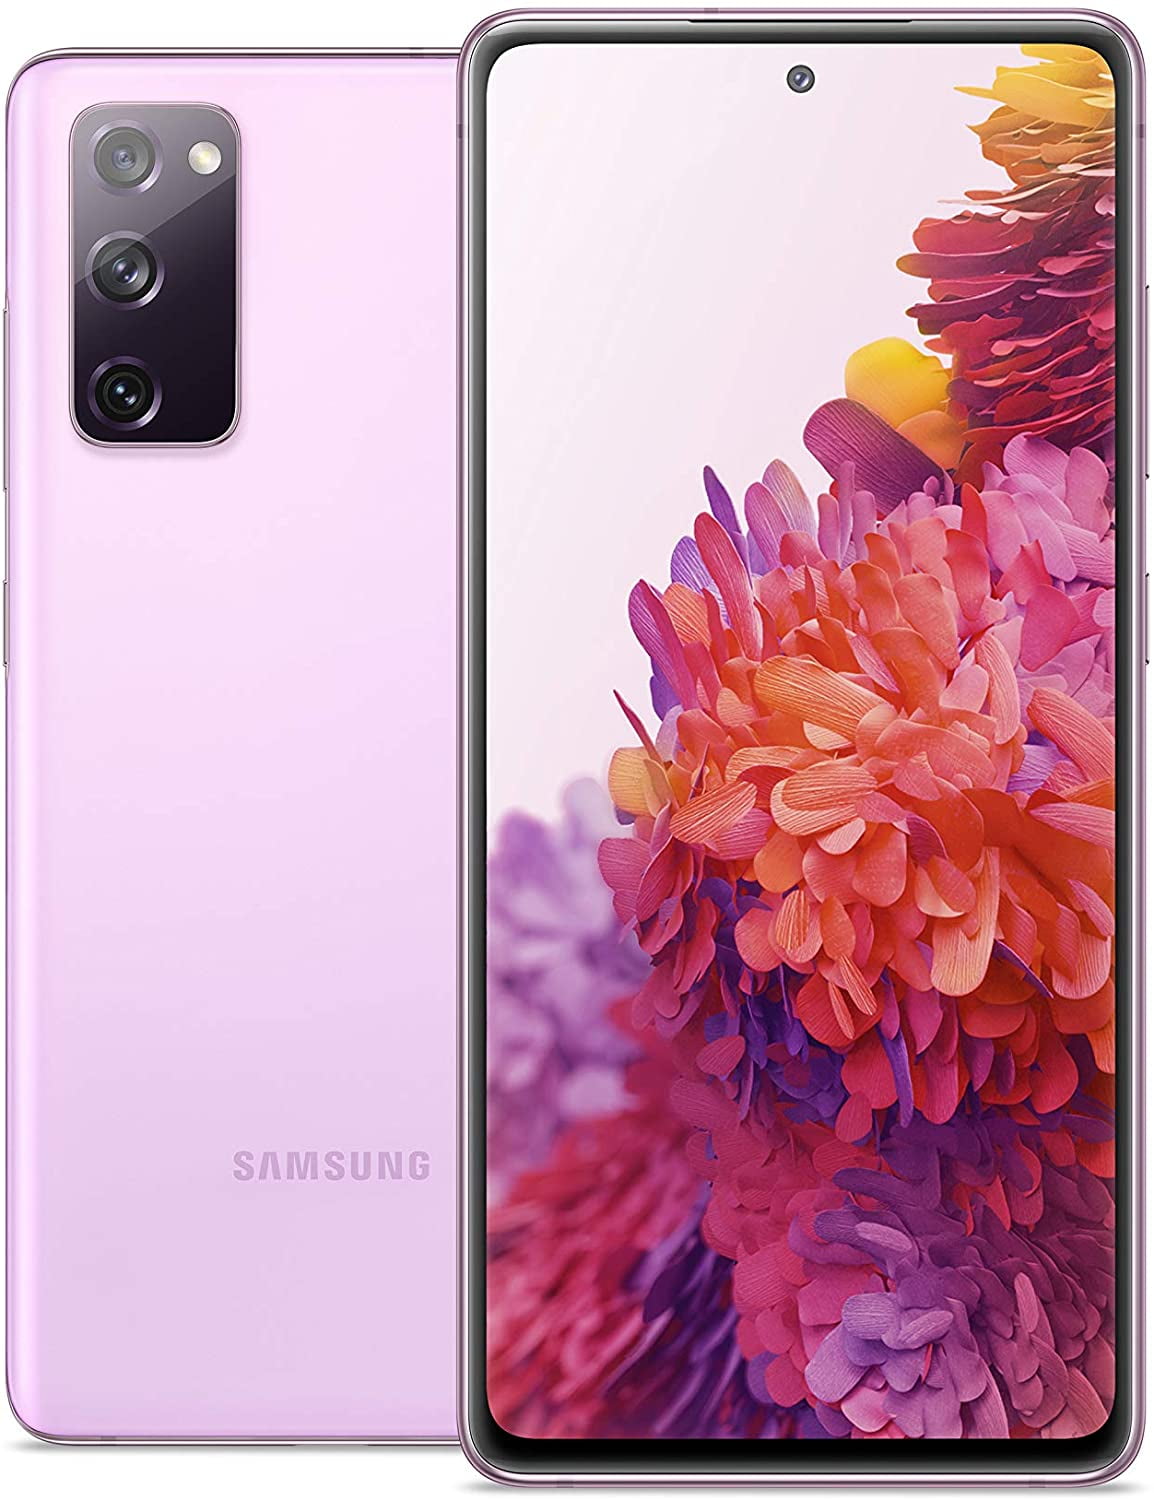 Pre-Owned Samsung Galaxy S20 FE 5G G781U 128GB Cloud Mint (Fully Unlocked)  Smartphone (Refurbished: Good) 